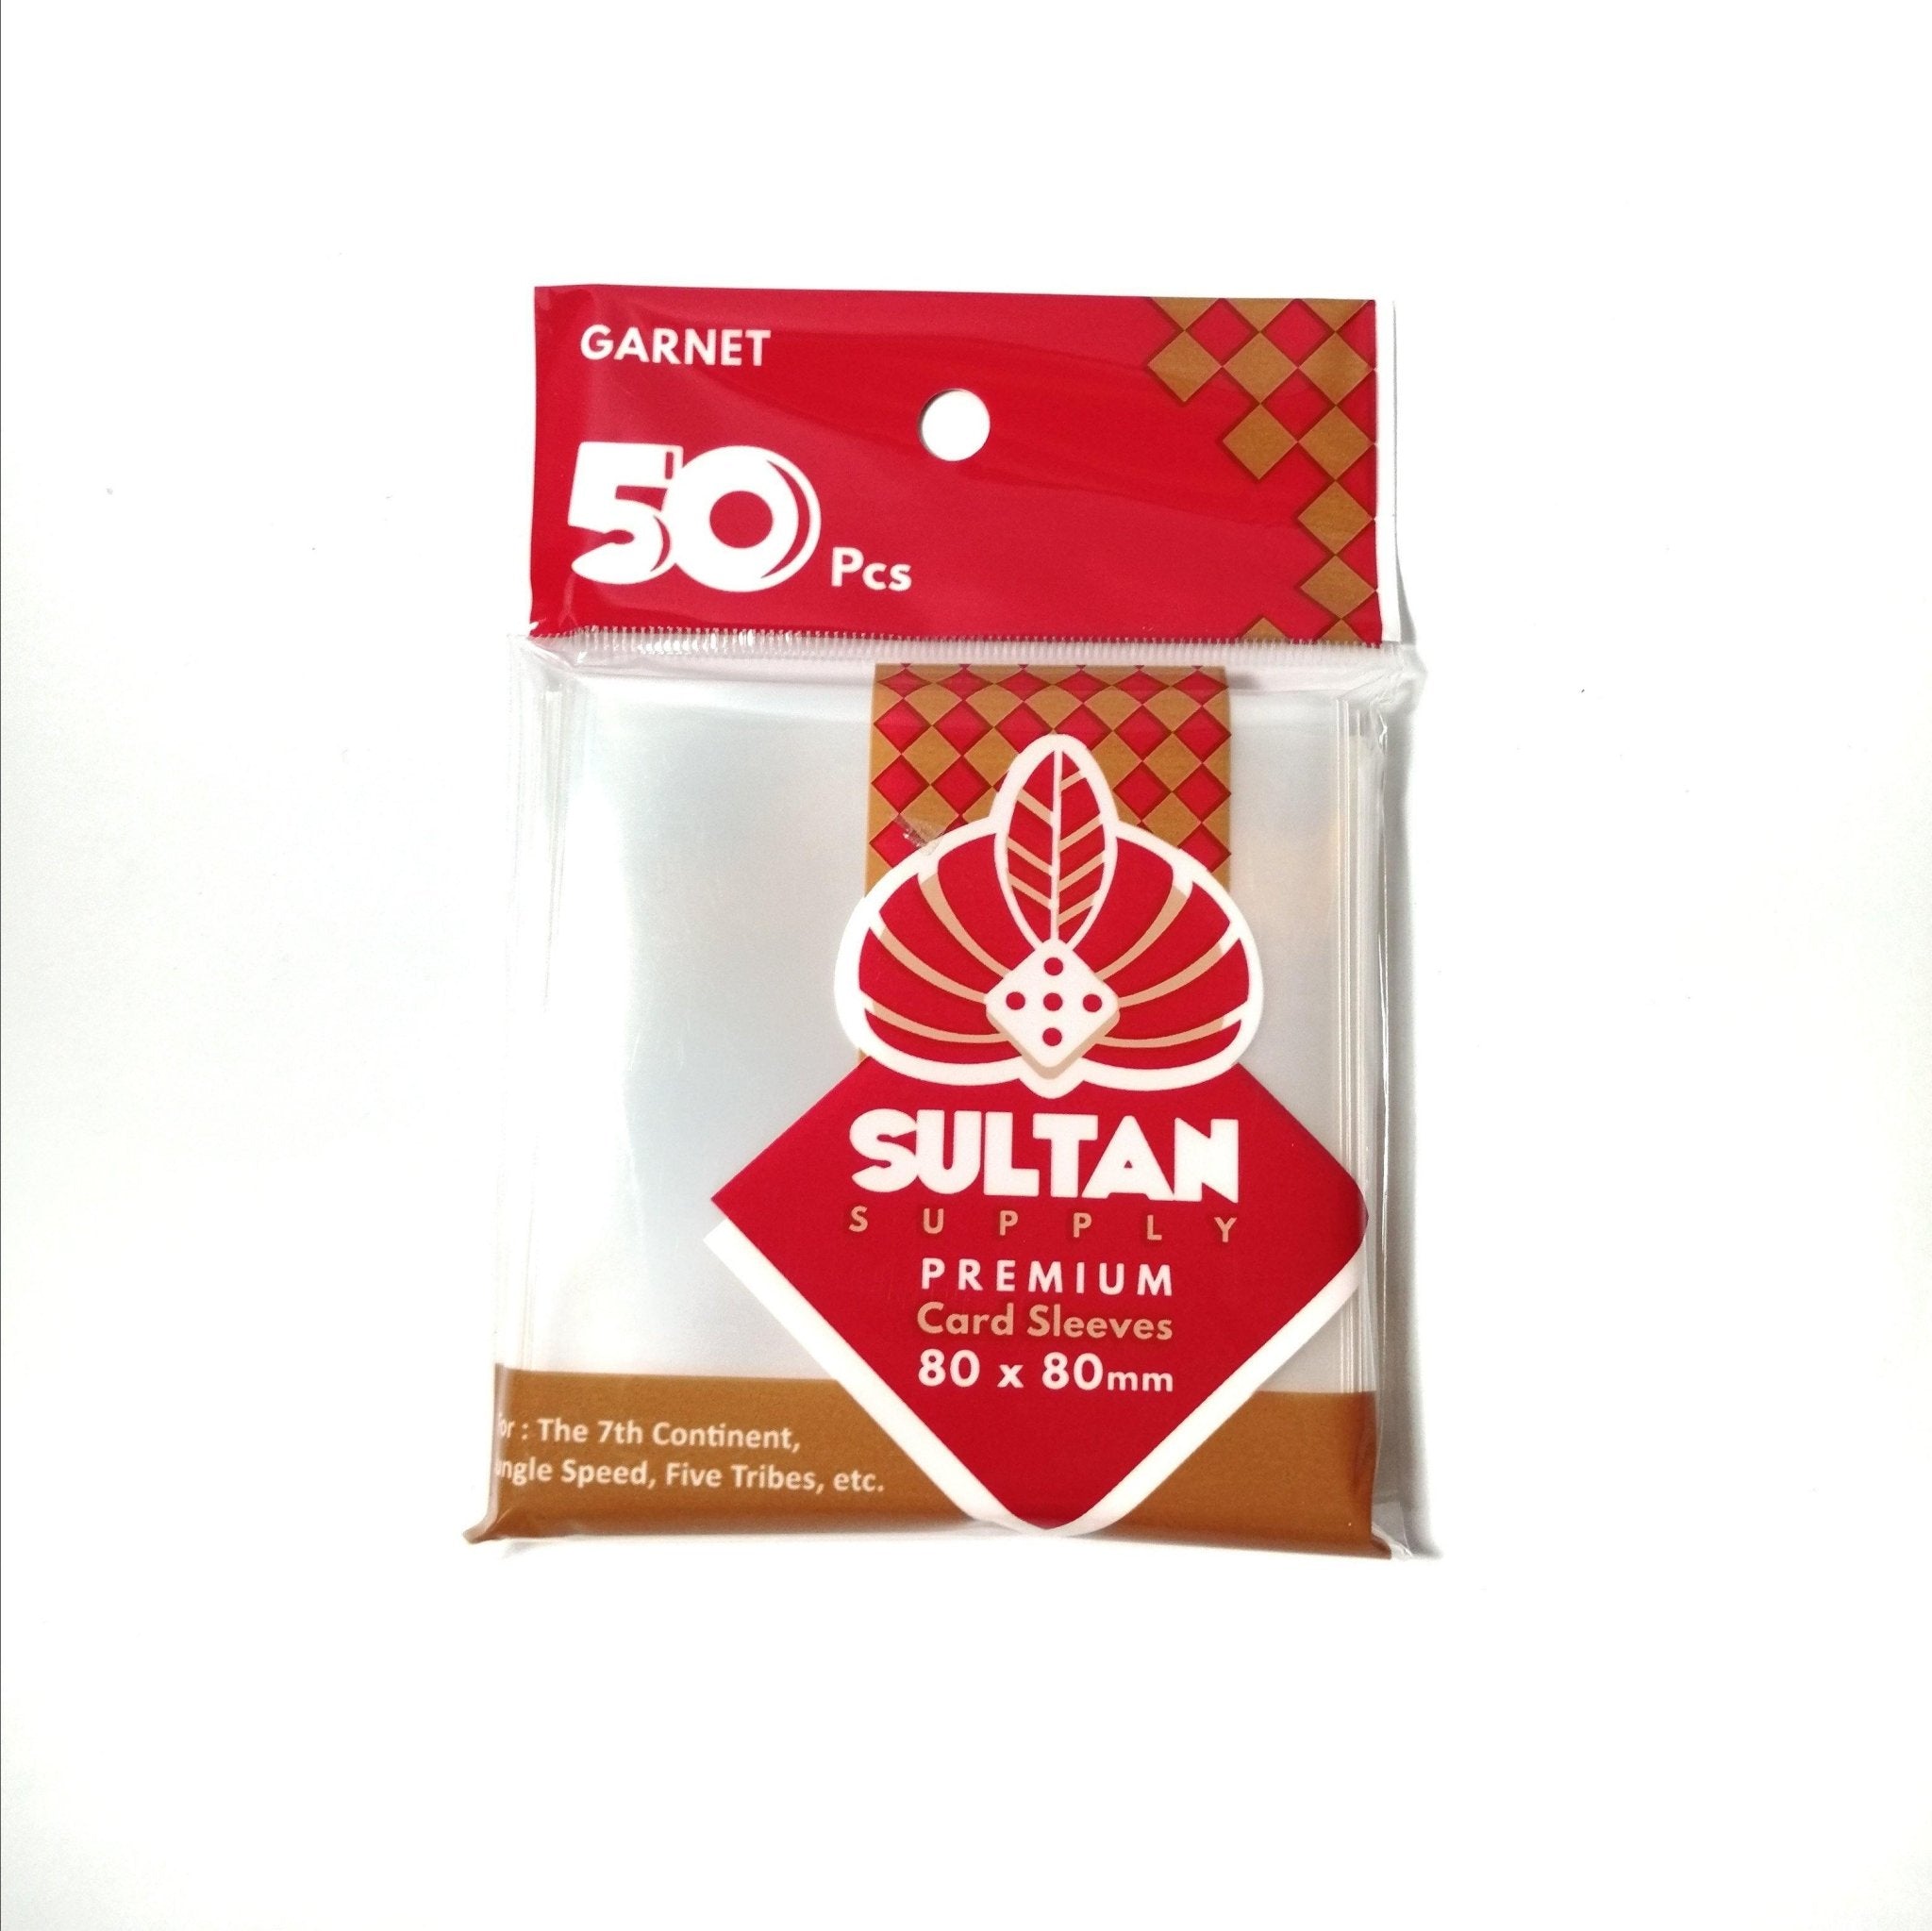 Sultan Supply Premium Card Sleeves: 80 x 80 Medium Square Garnet - Gaming Library